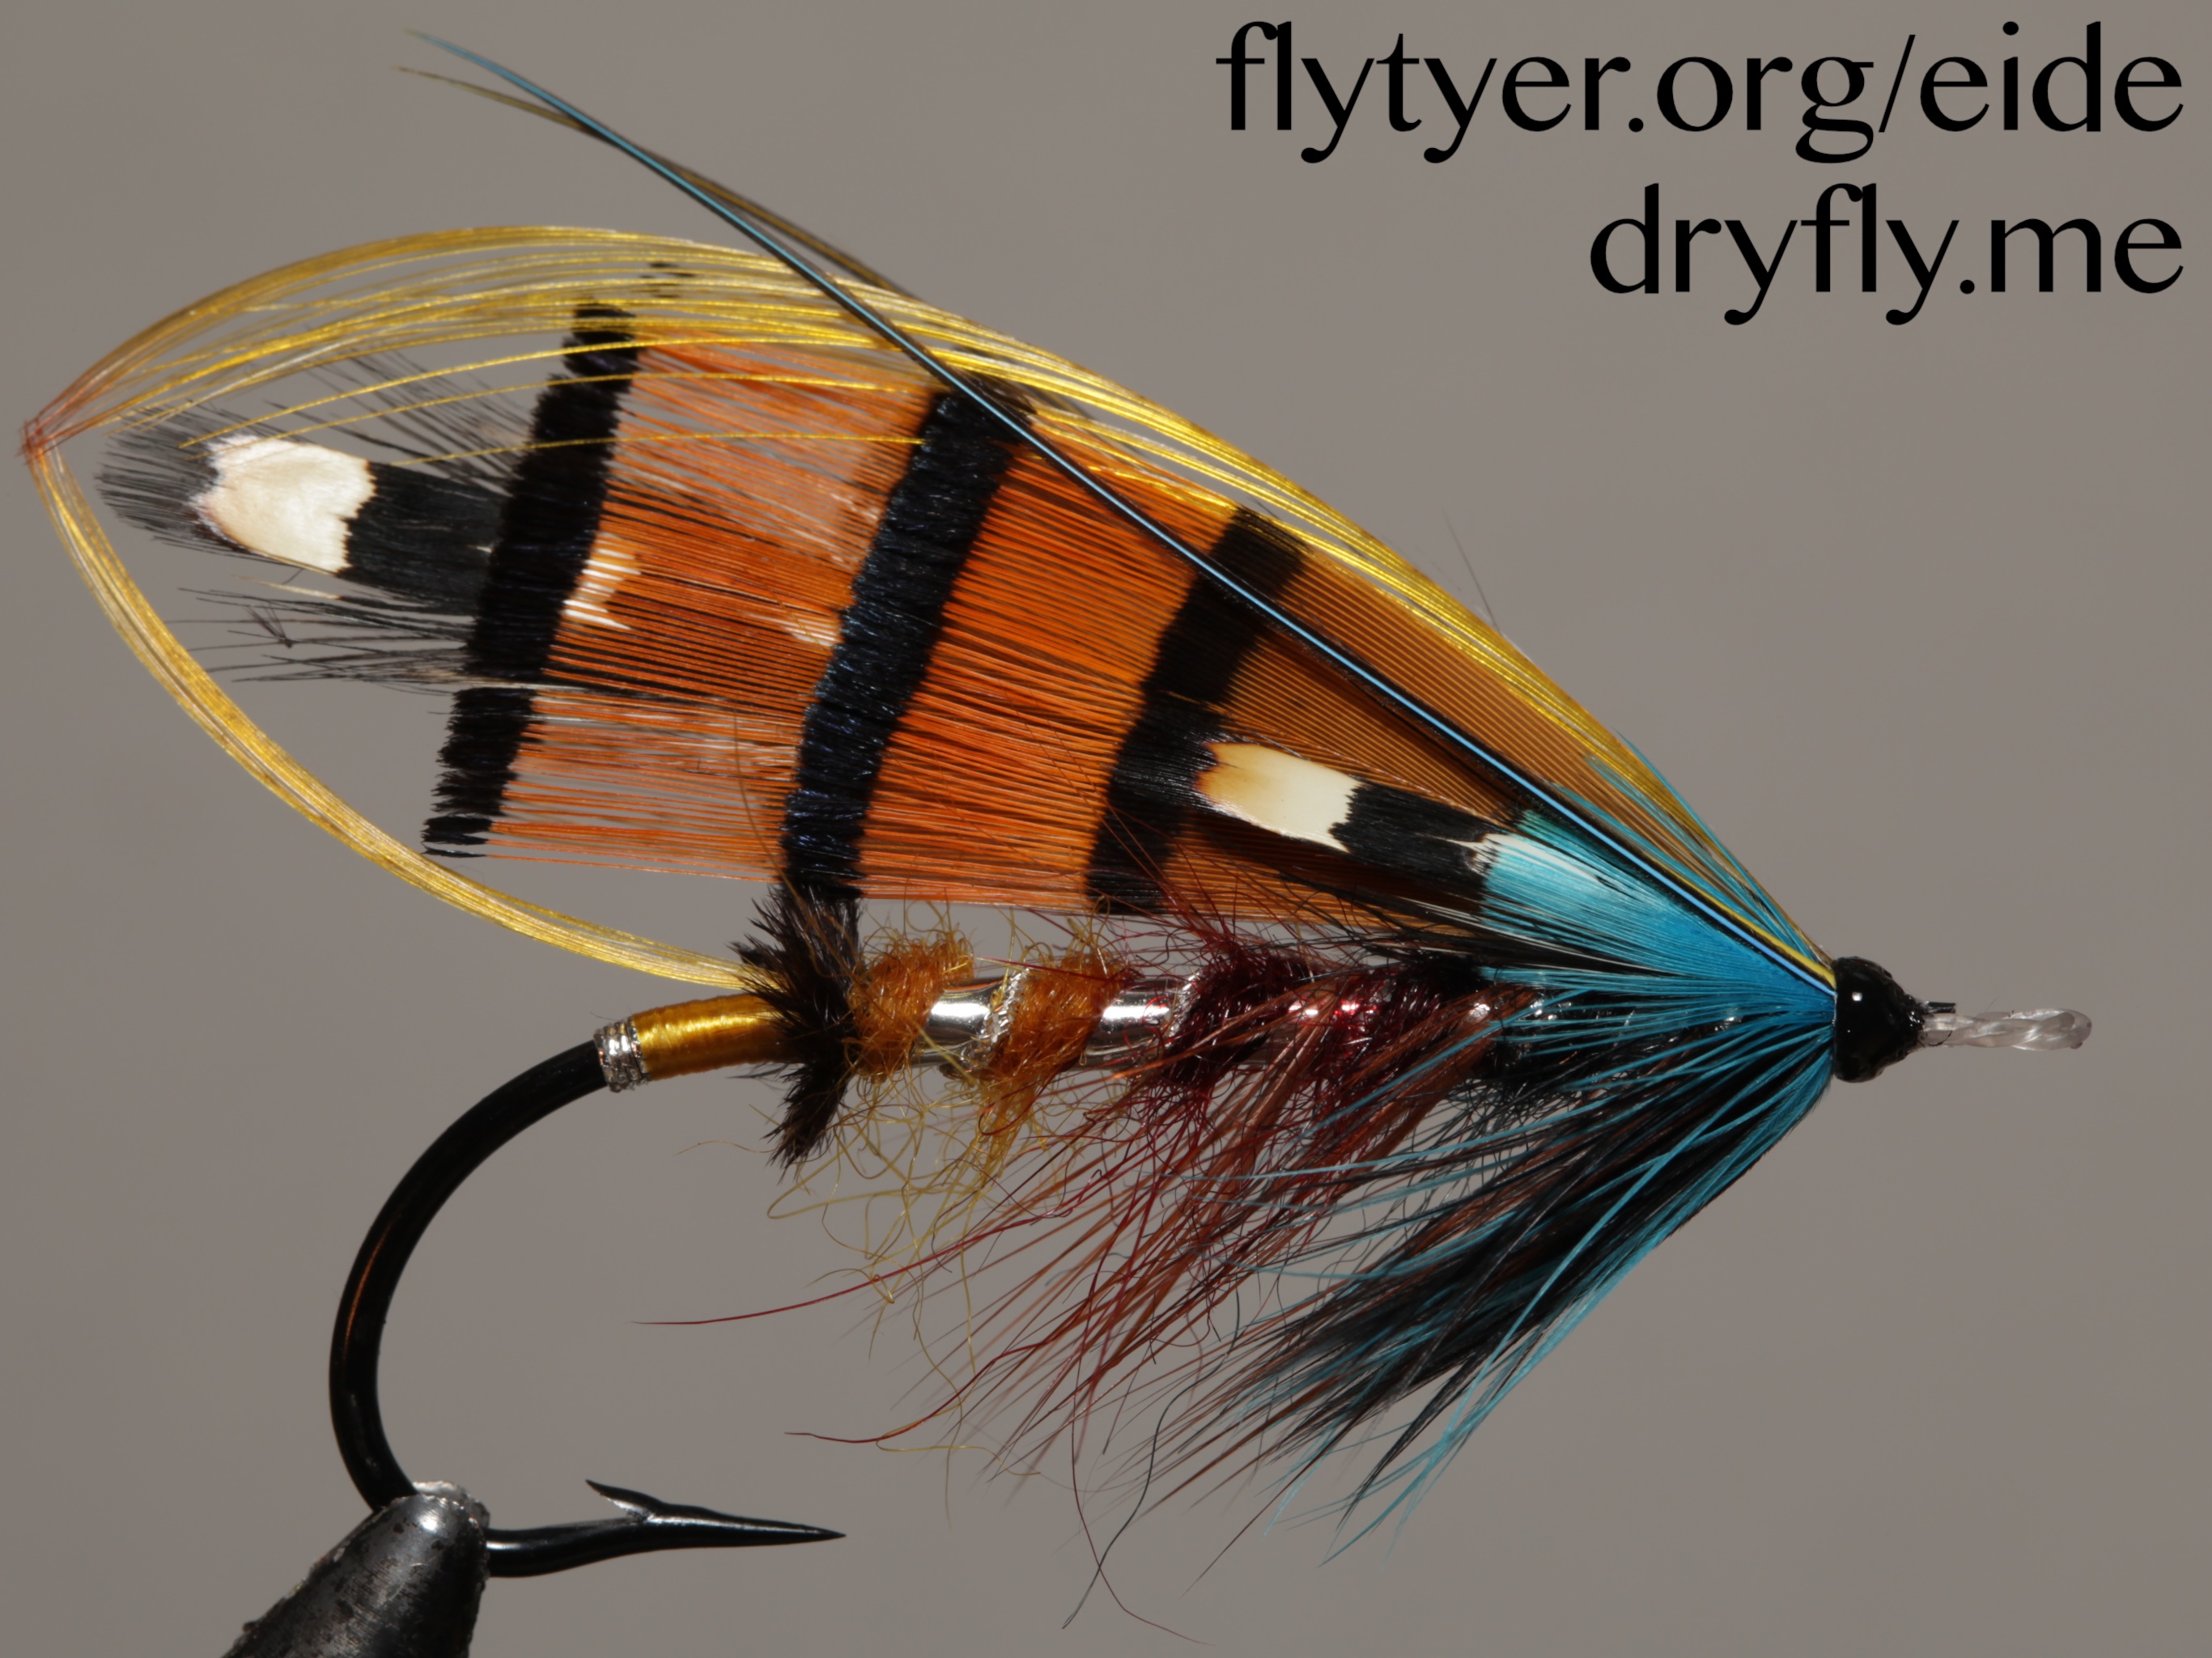 dryfly.me_.2016.07.05.durham.jpg